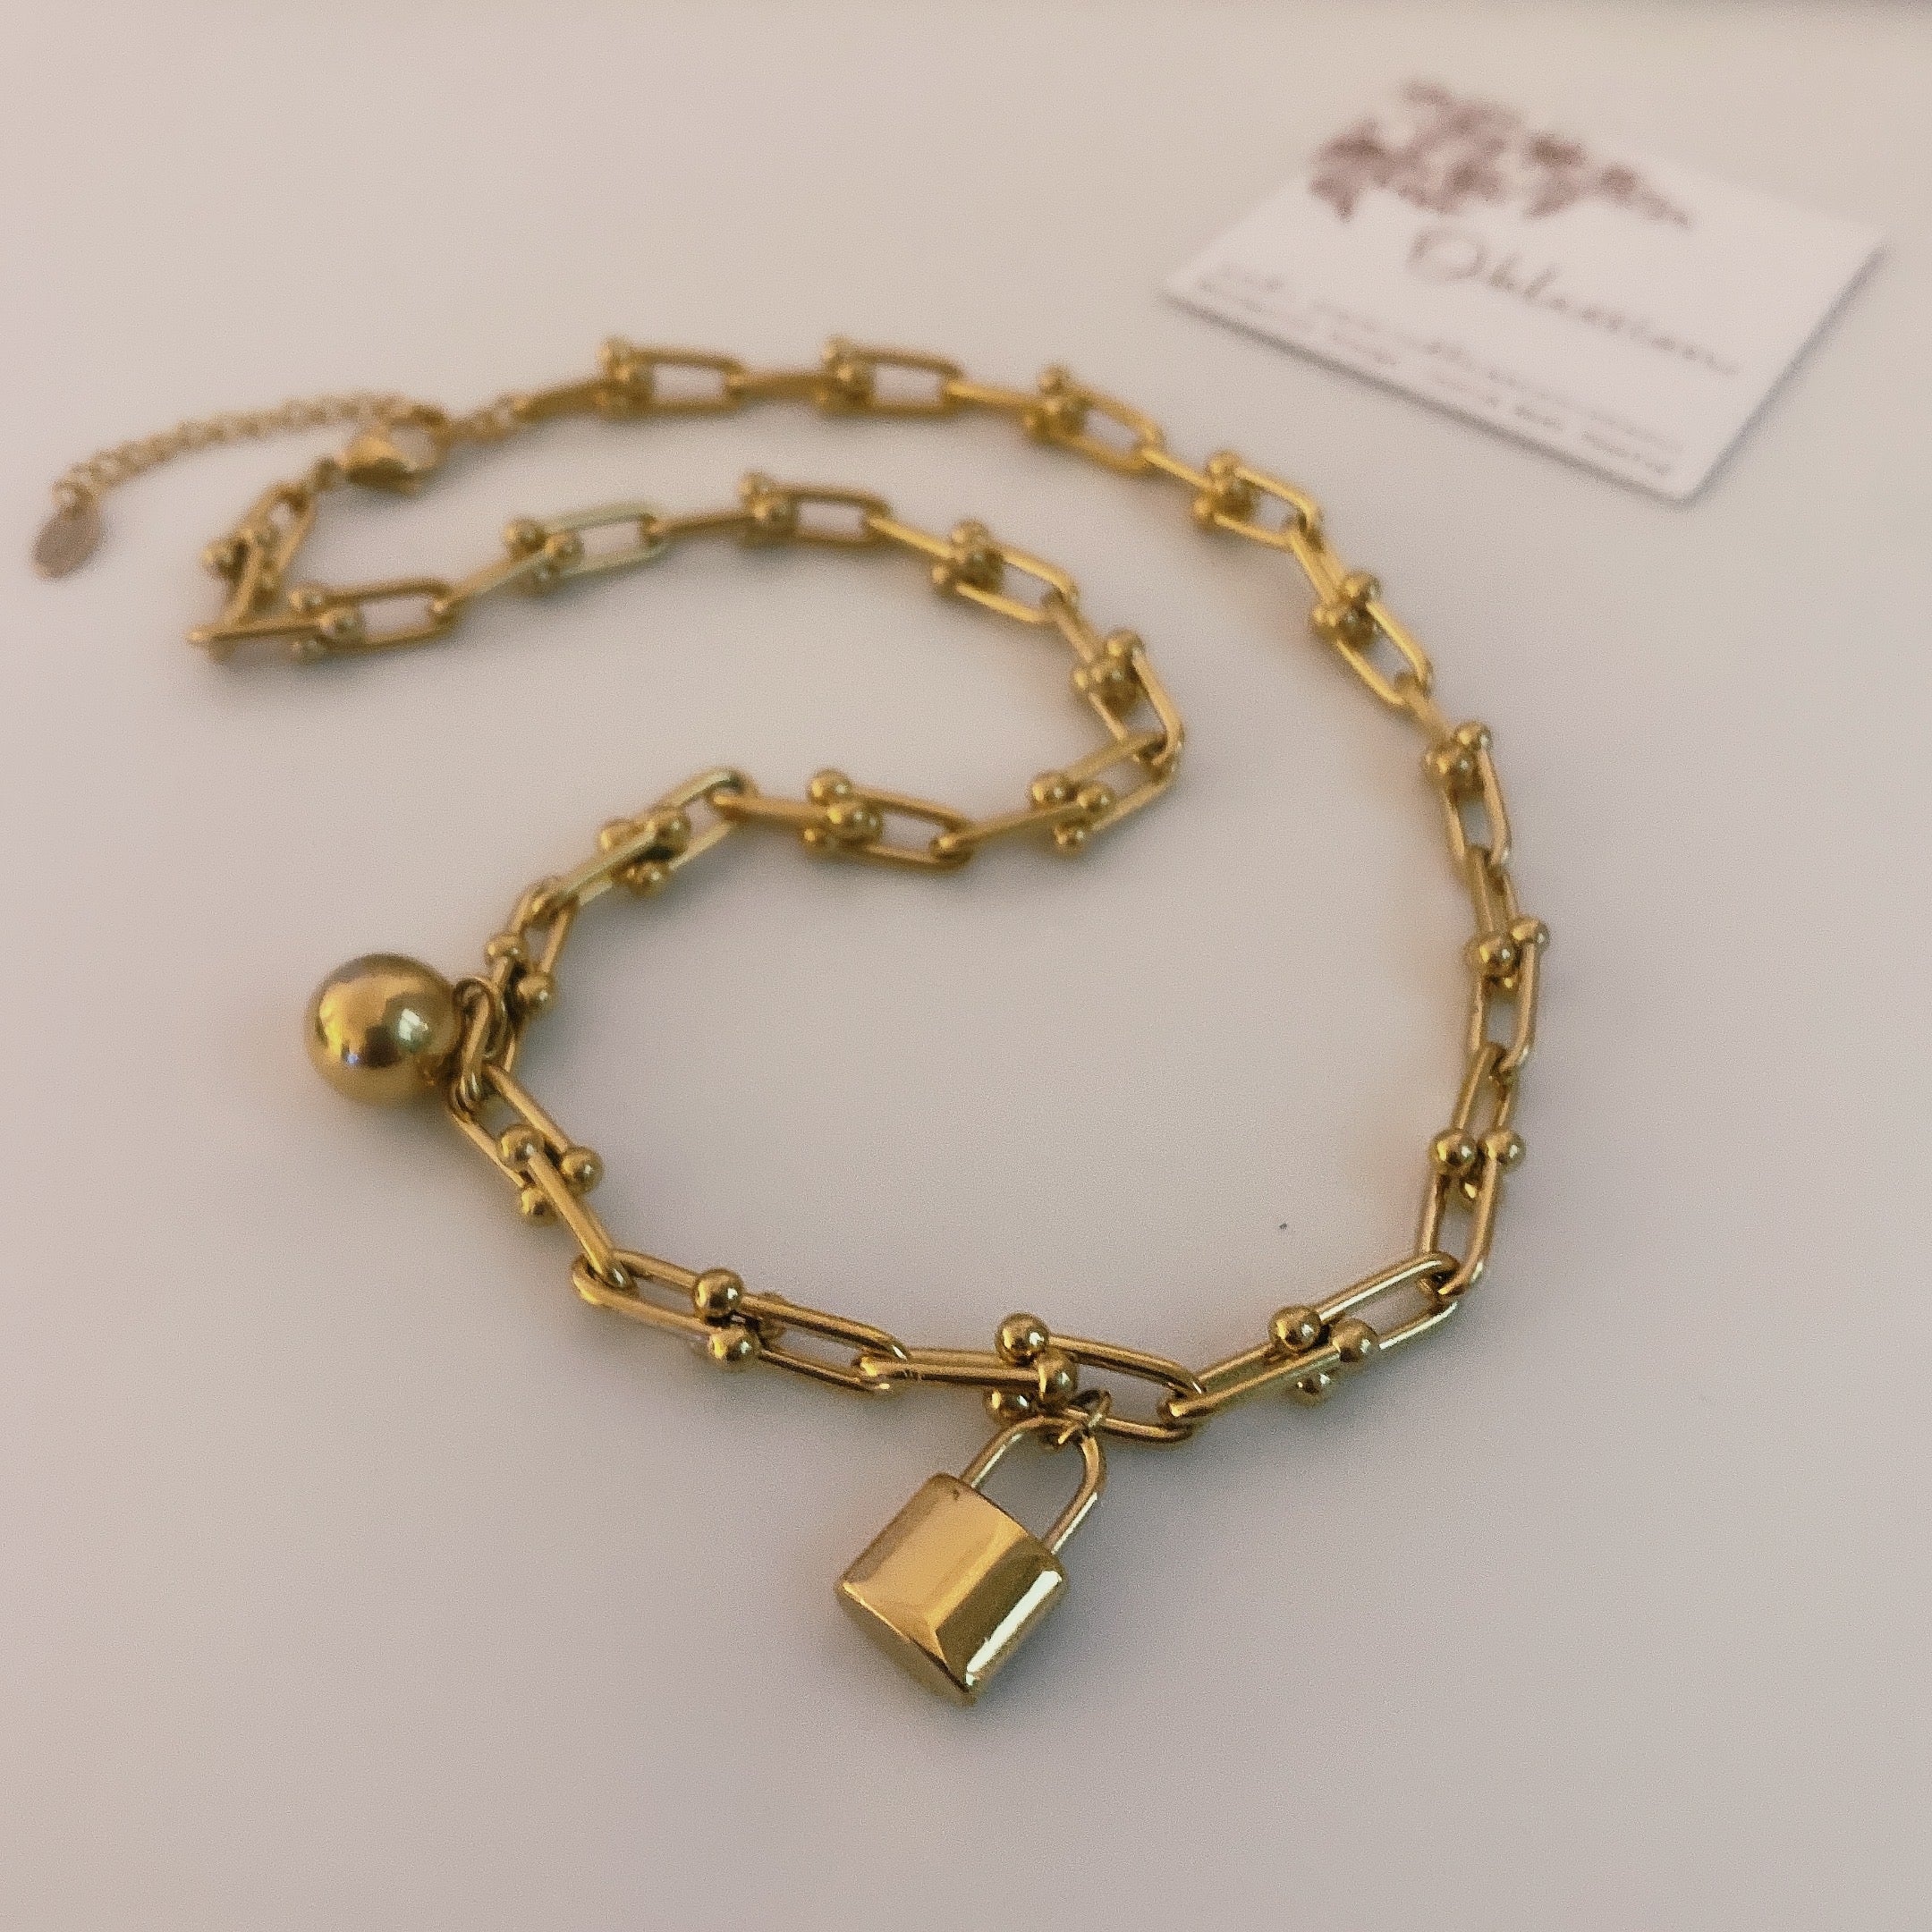 Padlock & Ball Necklace Bracelet 18K Gold U-Link Chain l Horseshoe Charm Necklace Choker Bracelet with Lock and Sphere